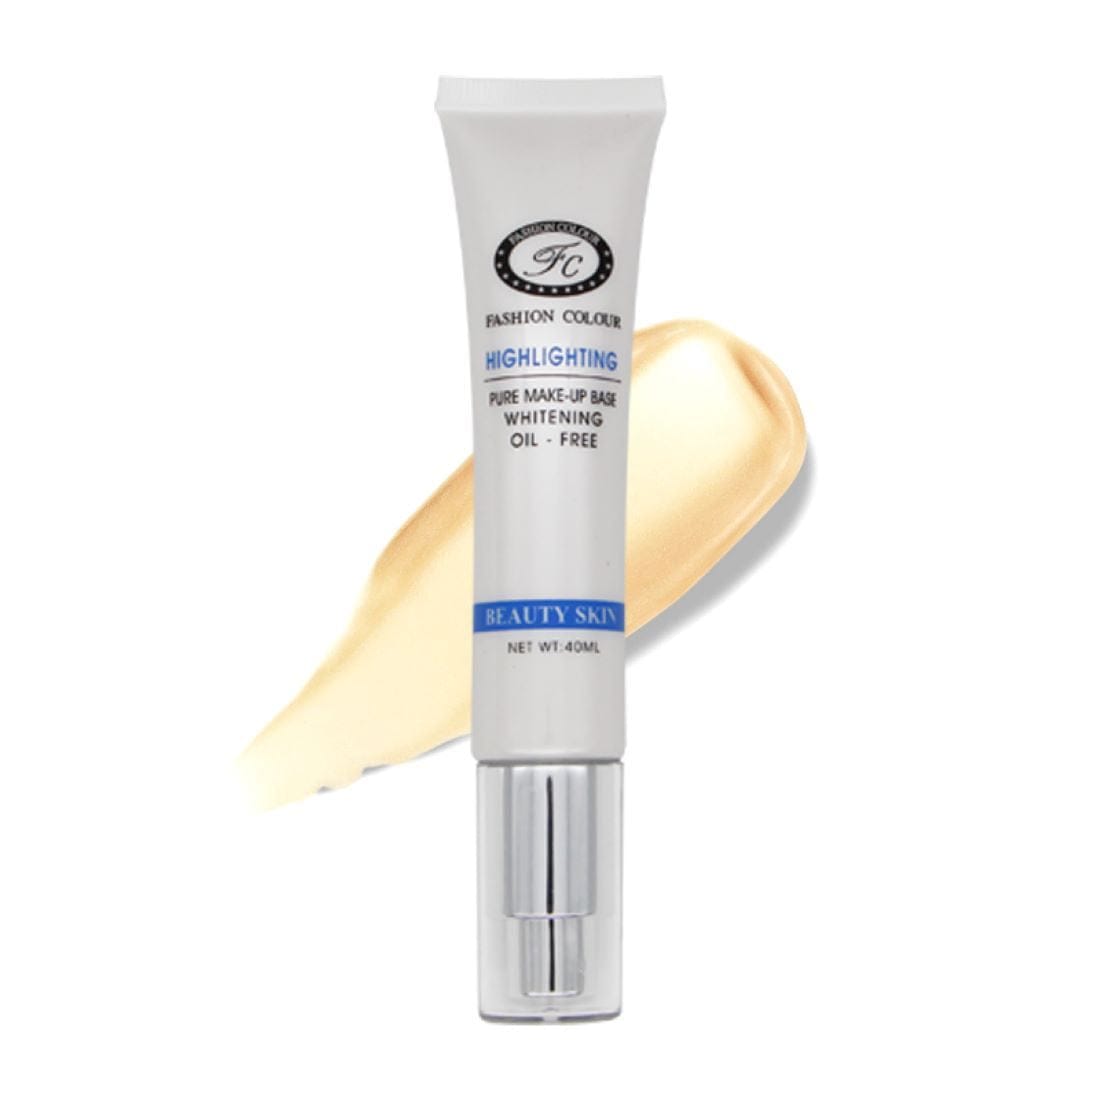 Golden High-lighting Pure Makeup Base II Whitening, Oil Free ( Dark Skin Tone ), 40ml